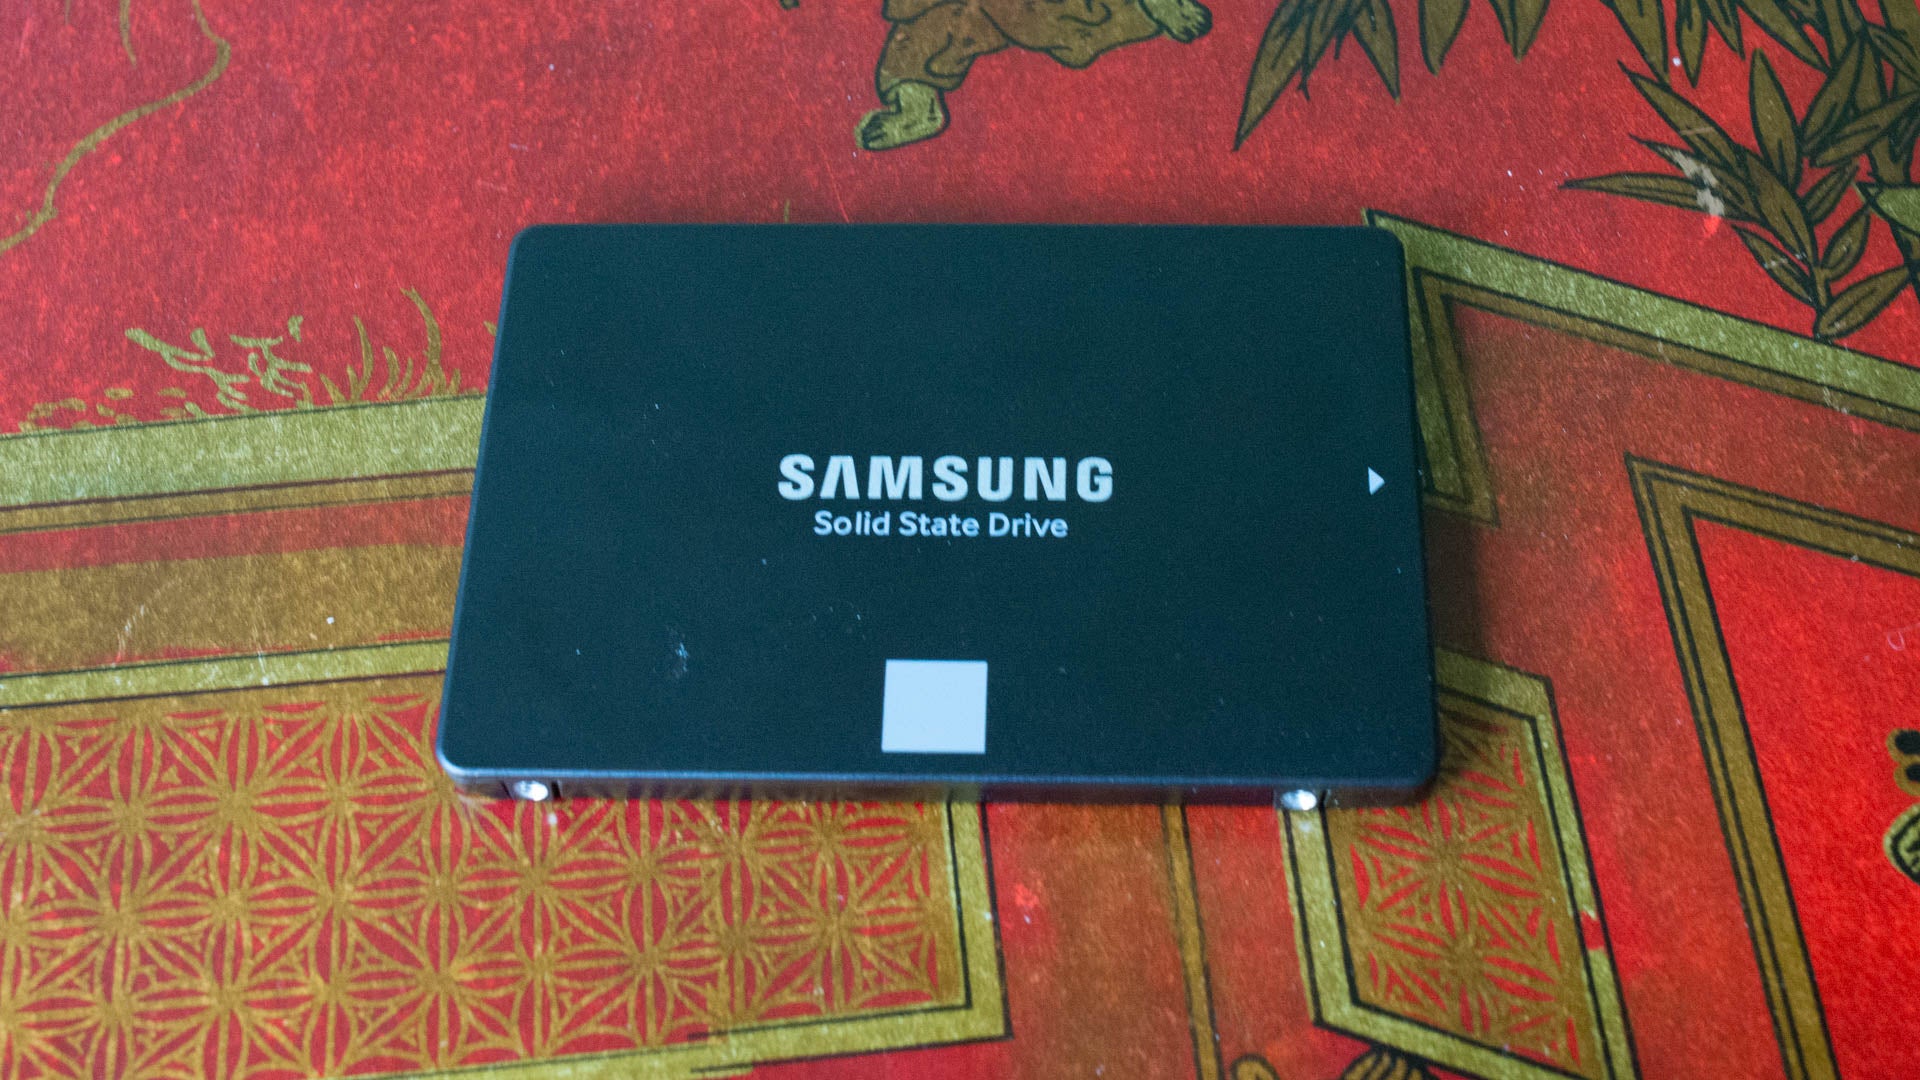 Samsung 860 Evo SSD on decorative red background.